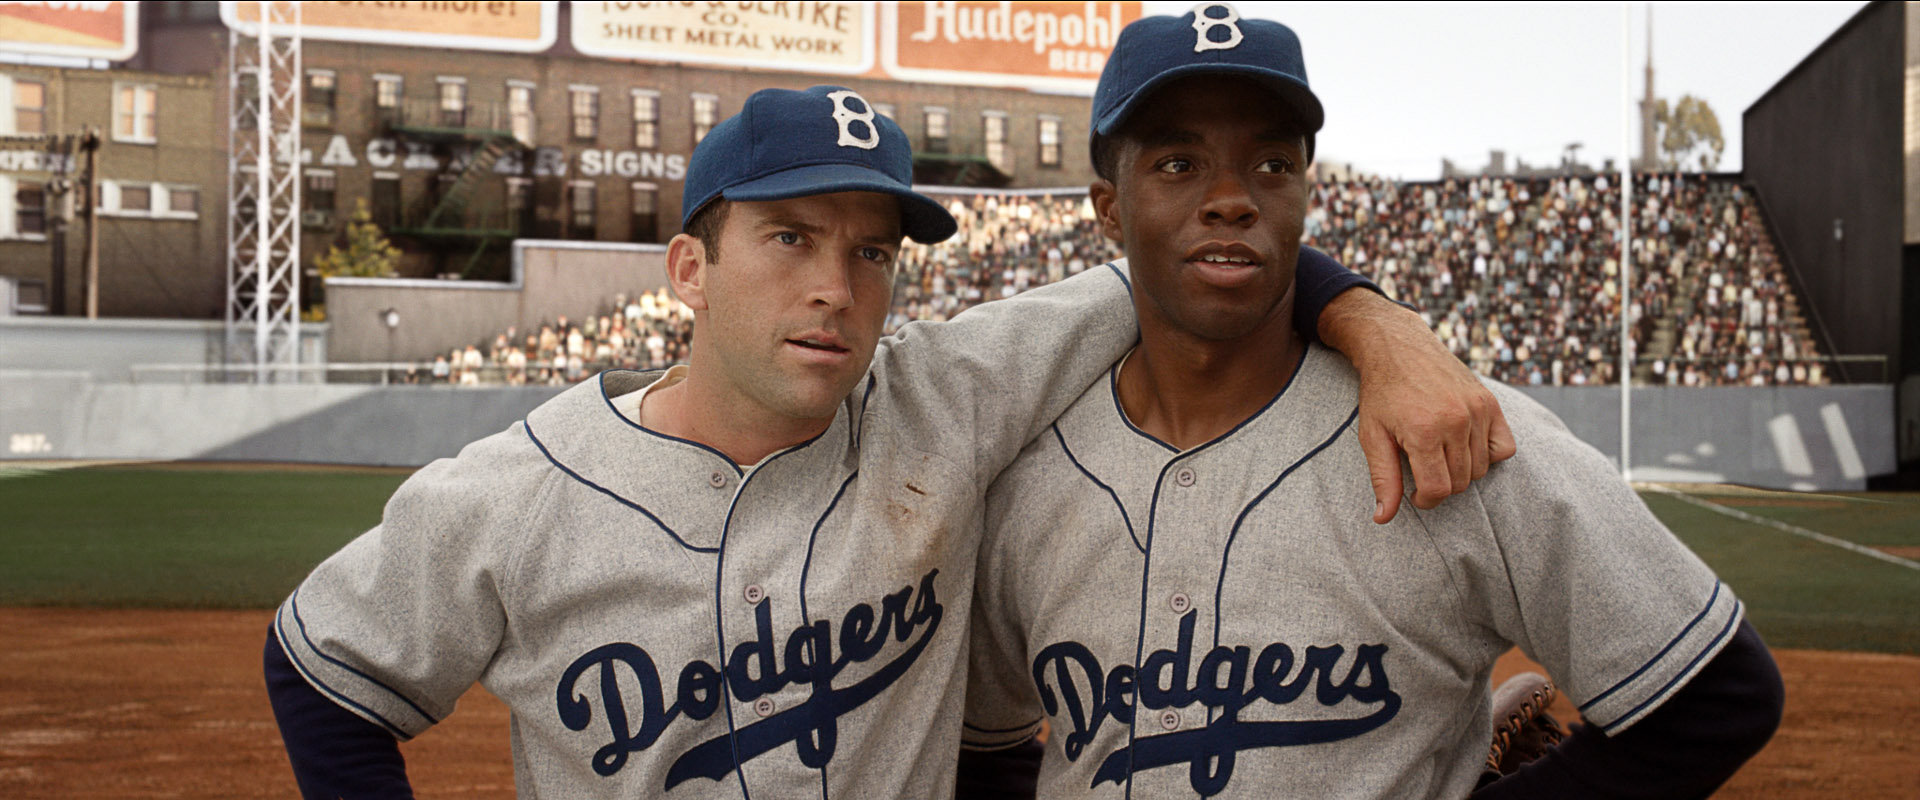 Chadwick Boseman, Jackie Robinson, Pee Wee Reese, Brooklyn Dodgers, baseball, 42